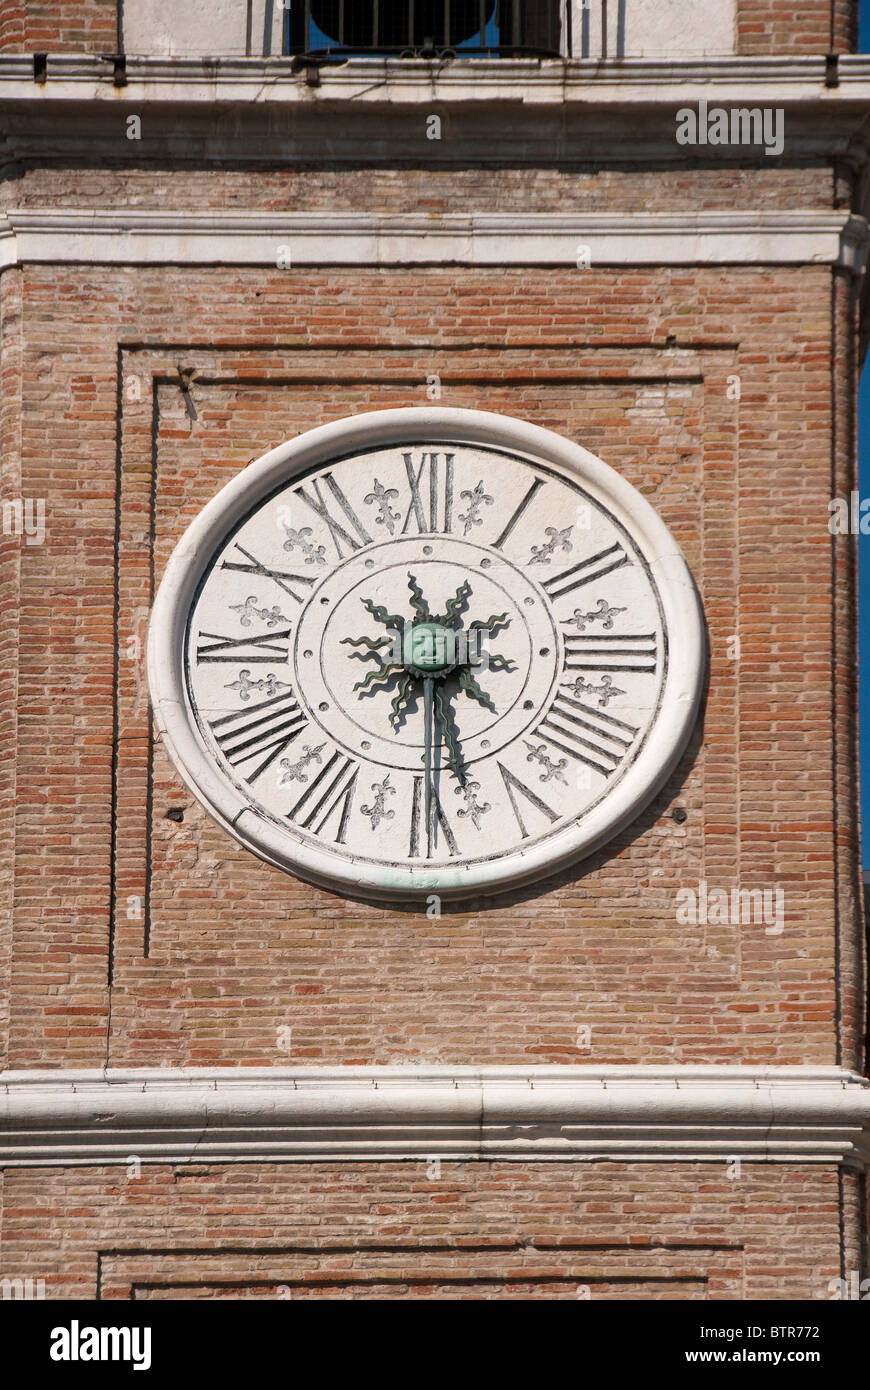 Orologio in Piazza Cavour, Rimini, Emilia Romagna, Italia Foto stock - Alamy